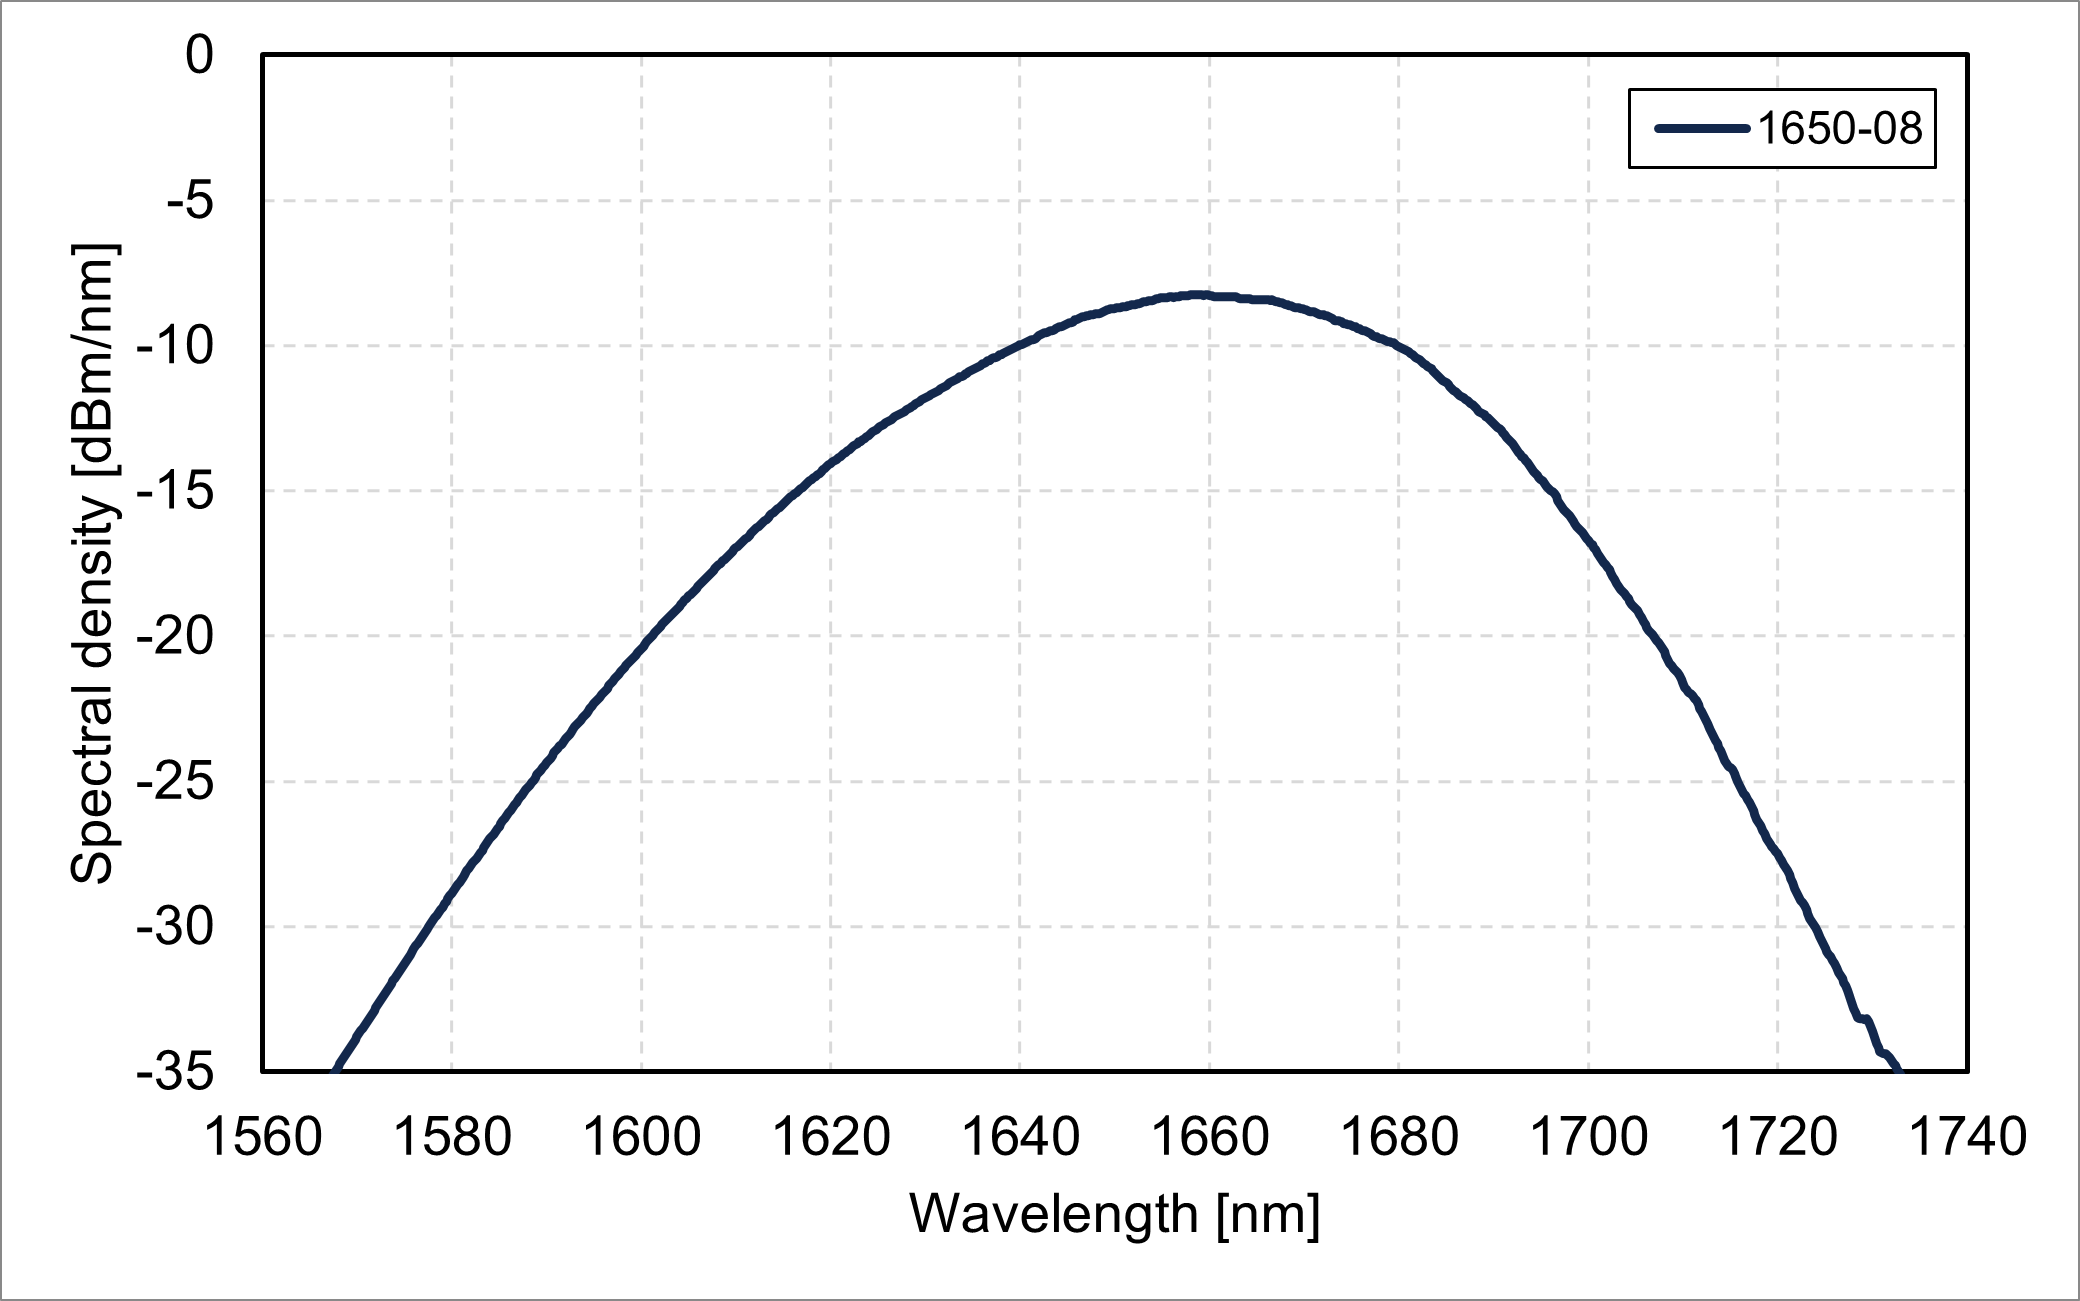 Spectral density vs. wavelength (1650-08)